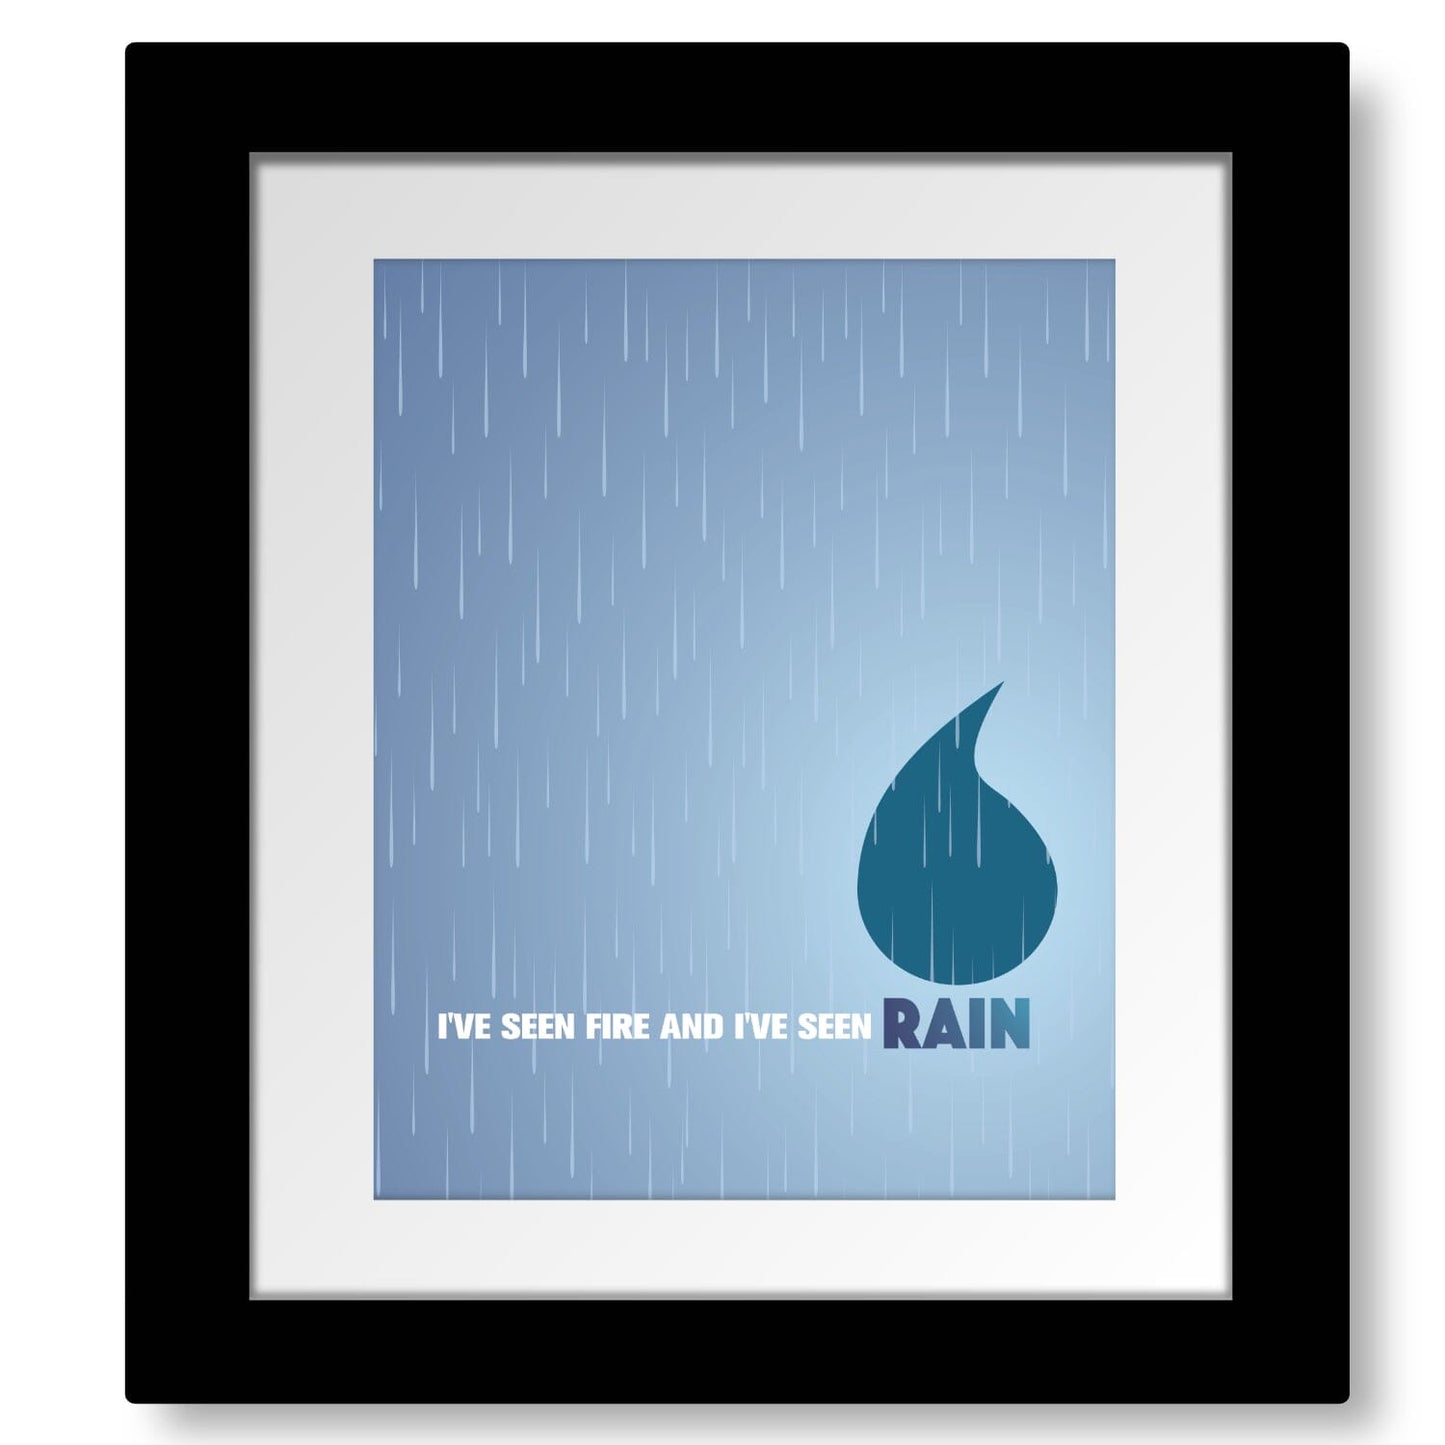 Fire and Rain by James Taylor - Music Wall Art Print Poster Song Lyrics Art Song Lyrics Art 8x10 Matted and Framed Print 